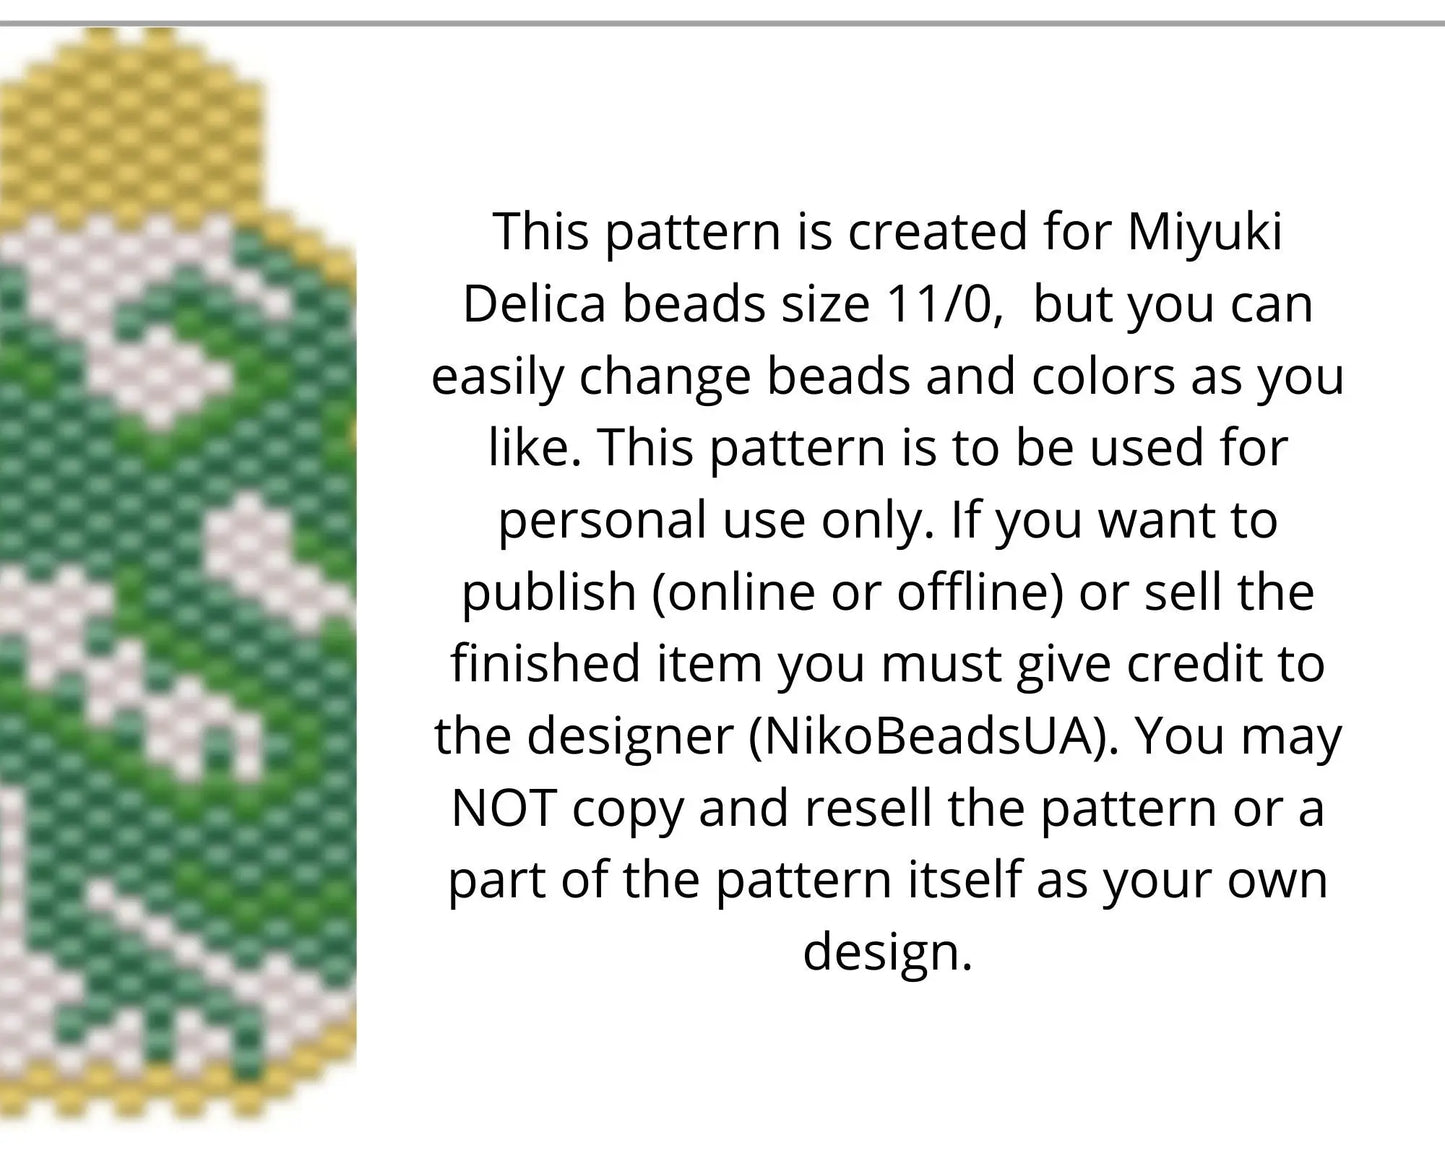 Dragon Brick Stitch pattern for beaded pendant and earrings NikoBeadsUA